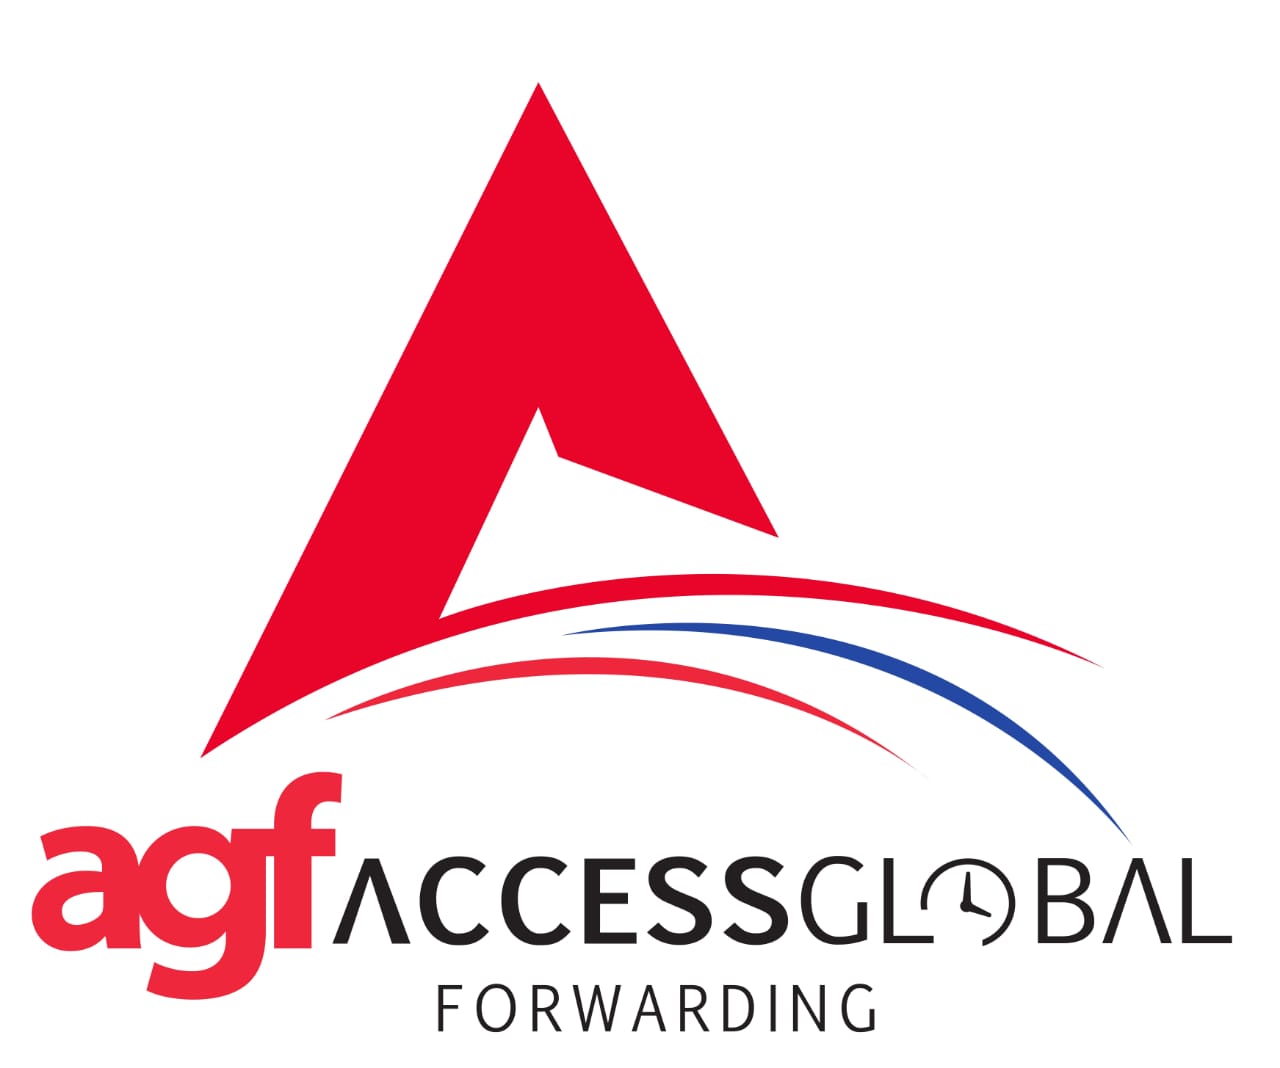 Global access. Фрейт Форвардинг логотип. Логотип s Forwarder. ООО А-Форвардинг. Ультра Глобал Форвардинг.